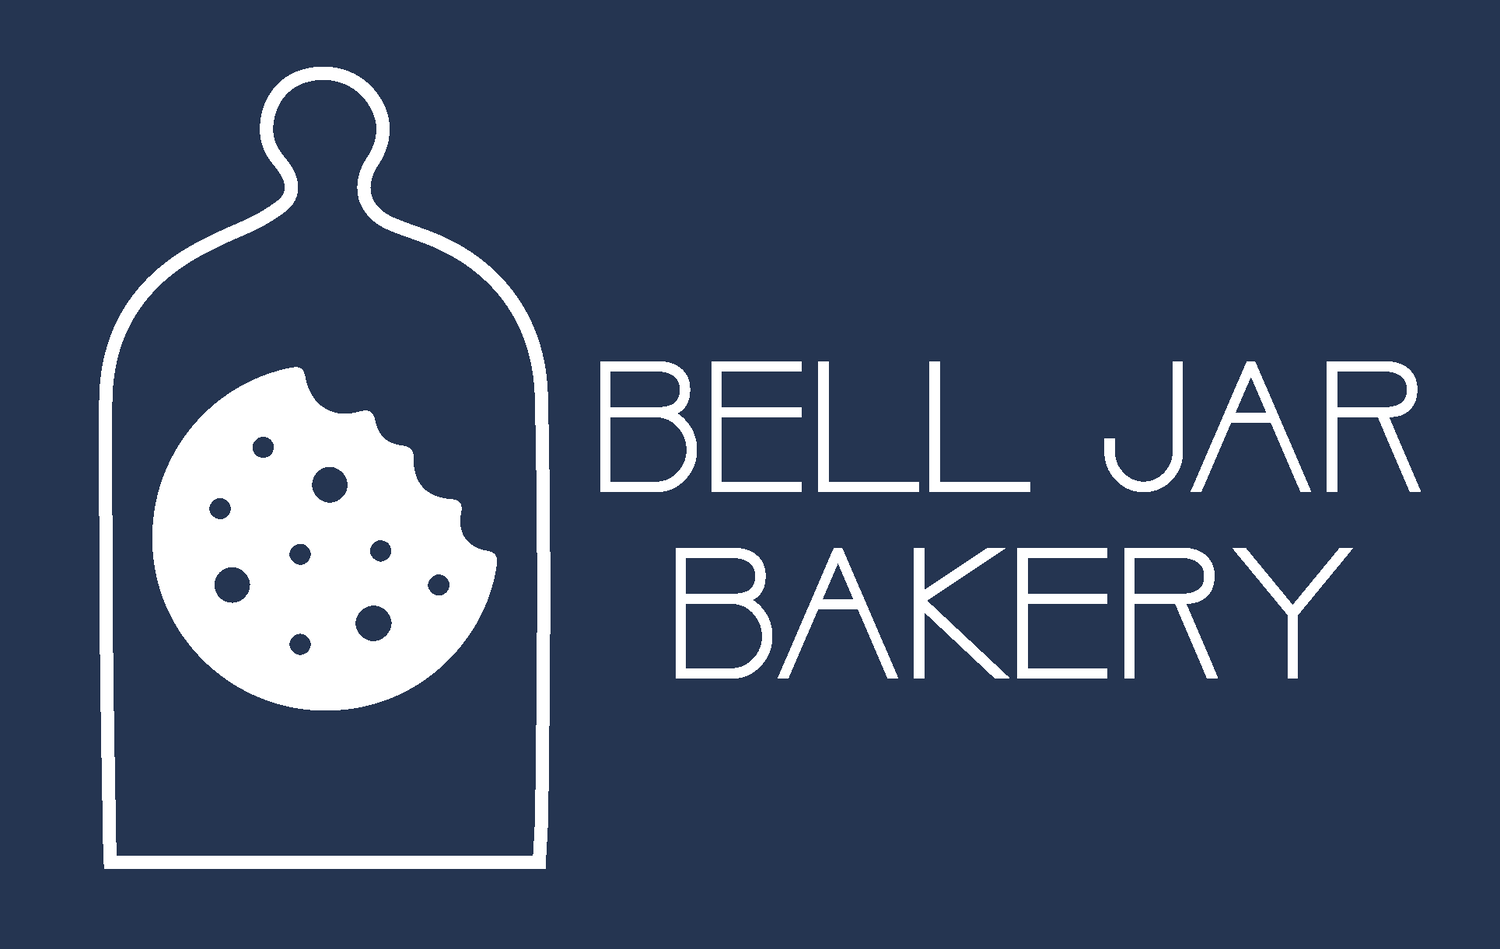 Bell Jar Bakery